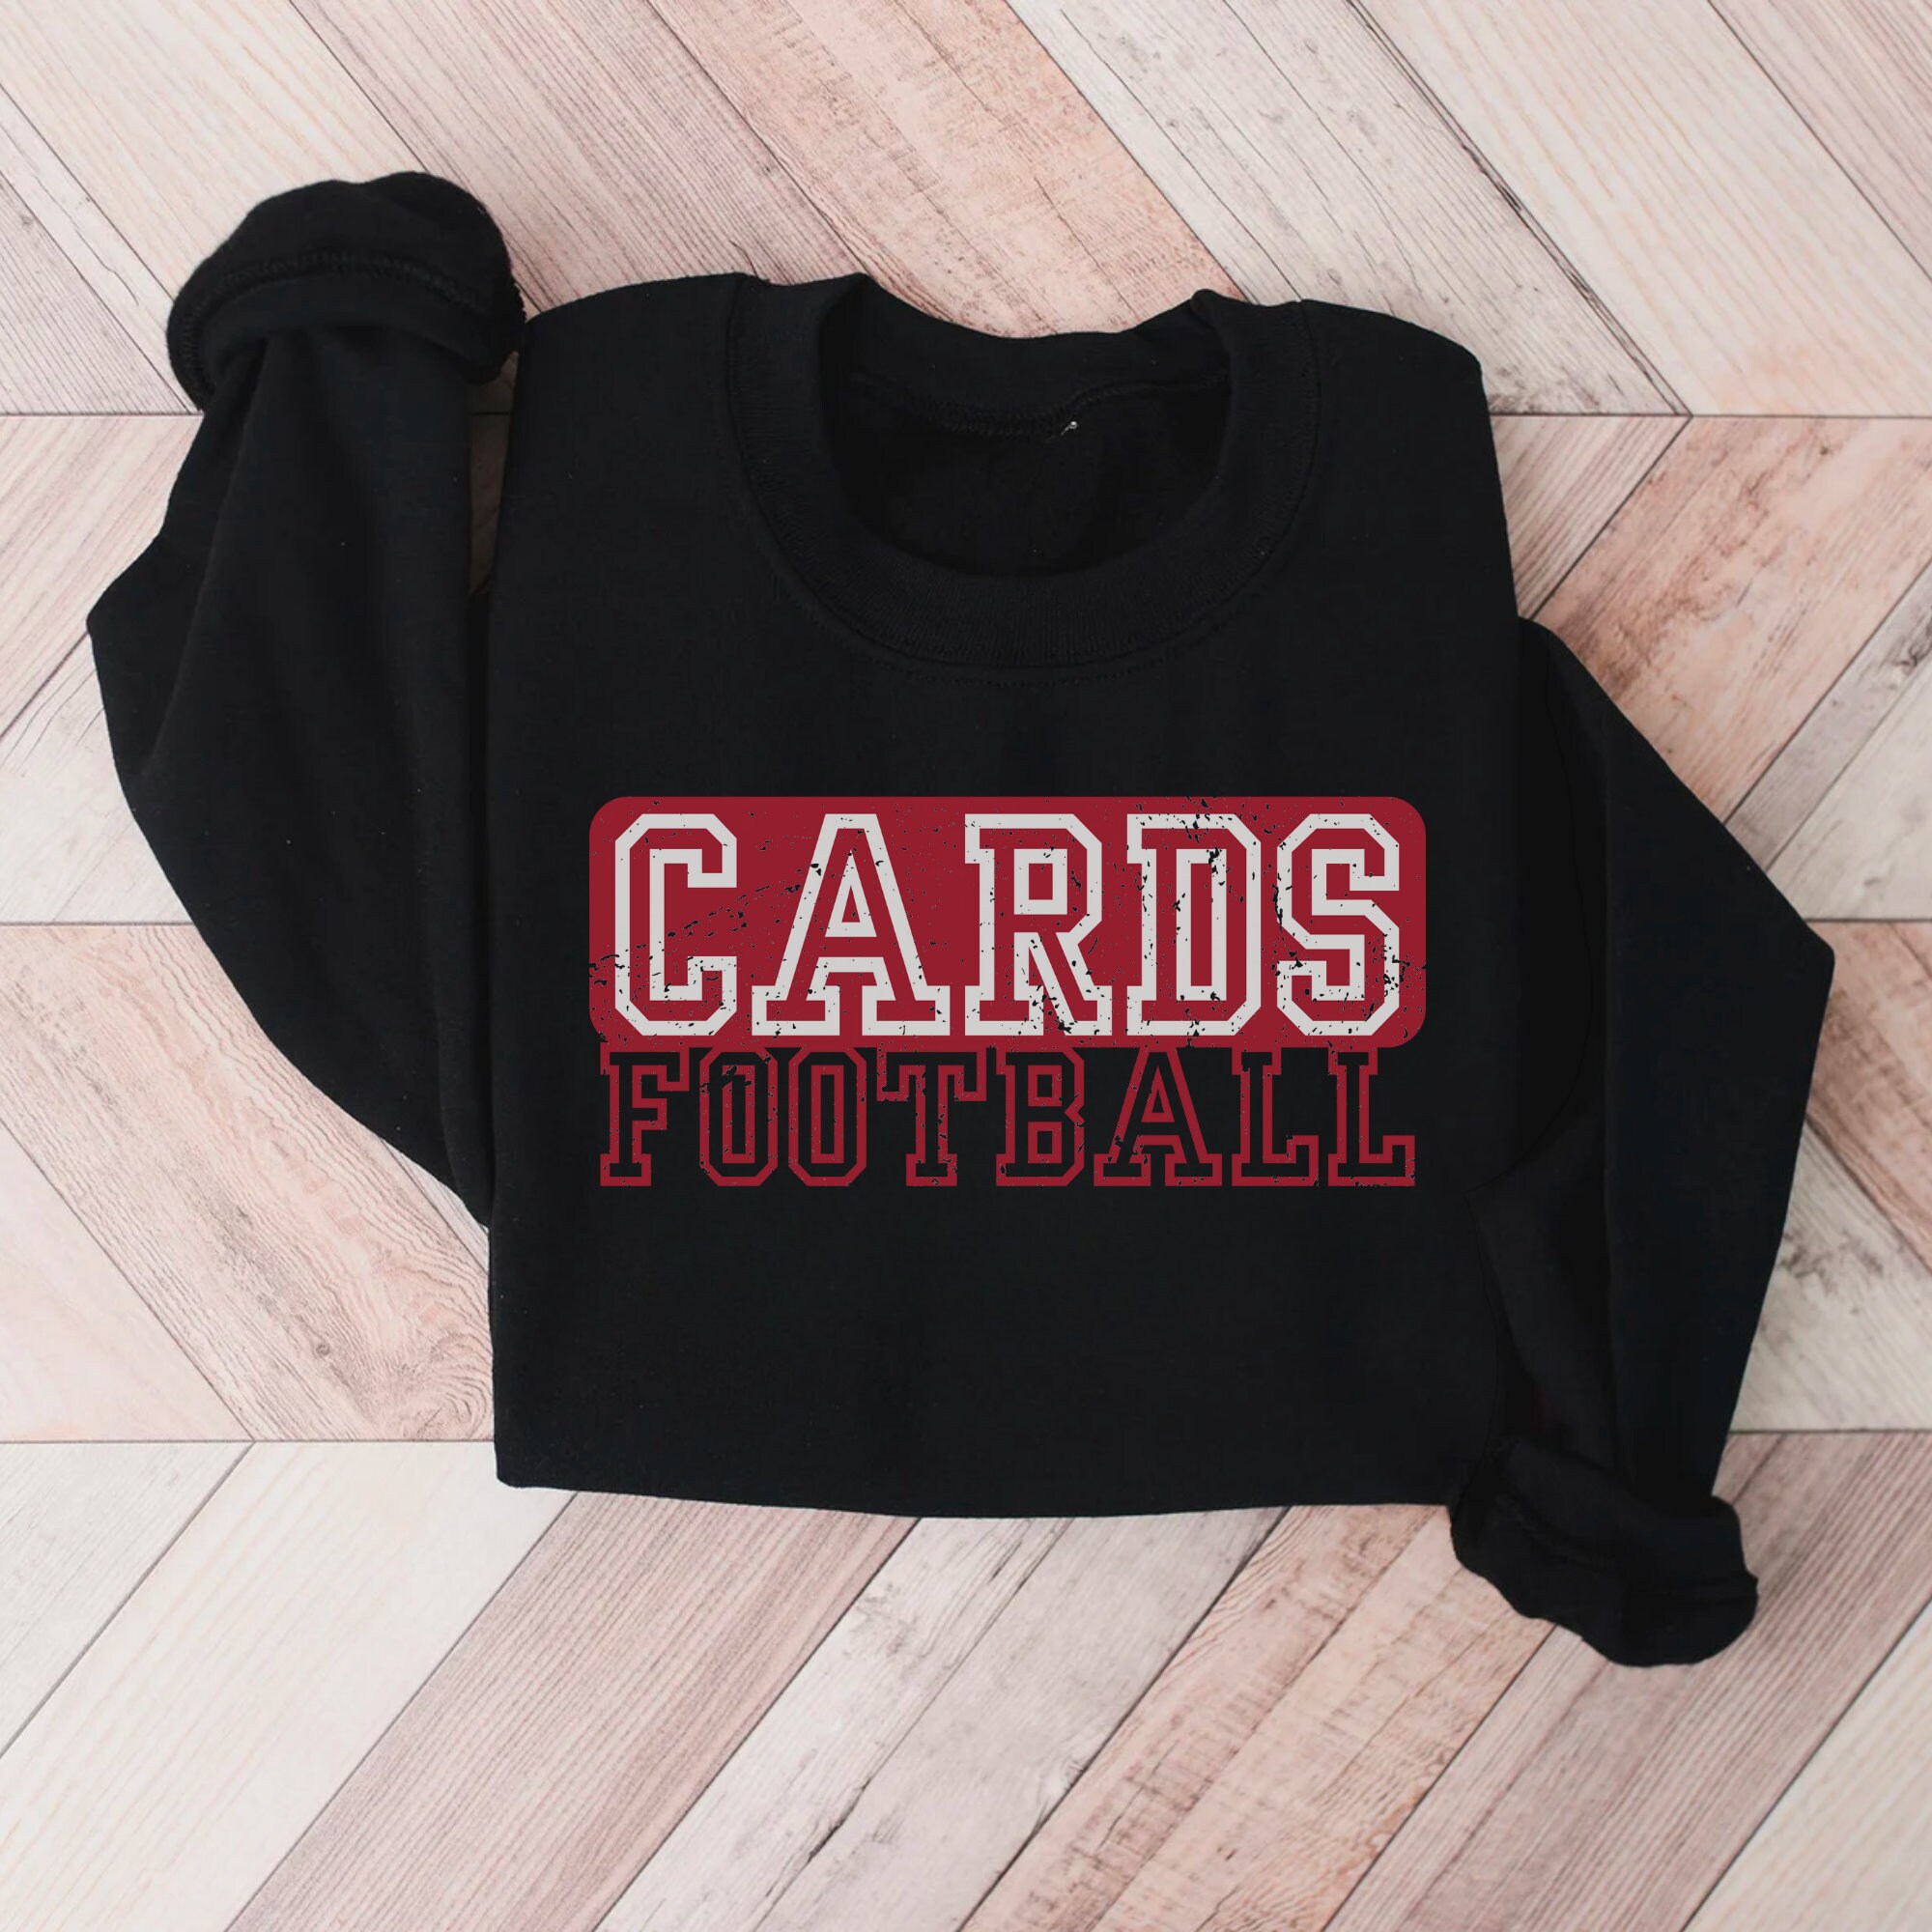 Vintage University of Louisville Cardinals the Cards Hoodie 